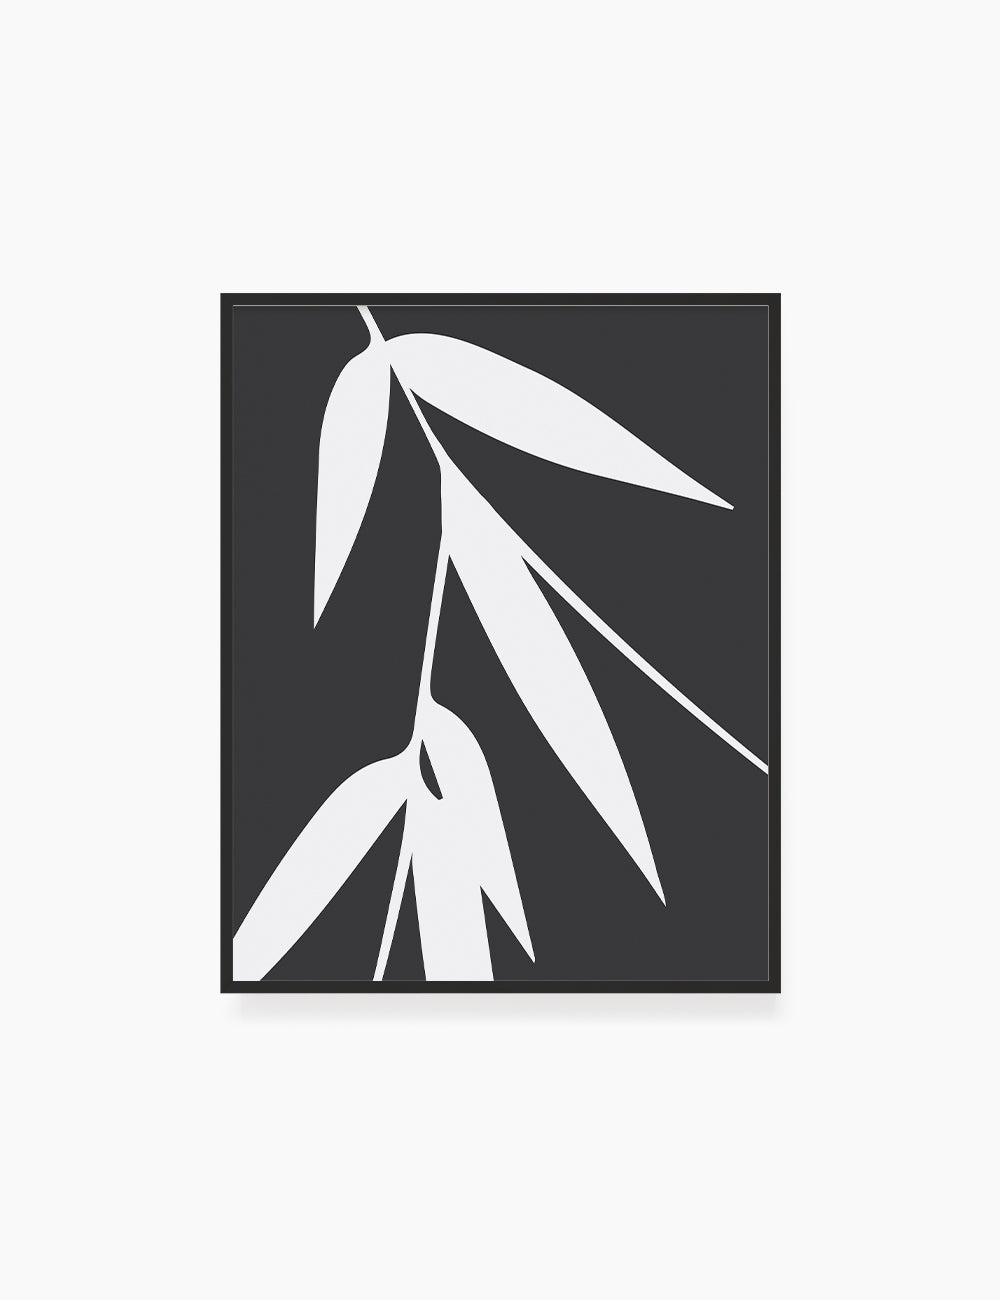 BAMBOO LEAVES. MINIMALIST BOTANICAL BOHO ART. BLACK AND WHITE. Minimal Aesthetic. Clean Design. Printable Wall Art Illustration. - PAPER MOON Art & Design